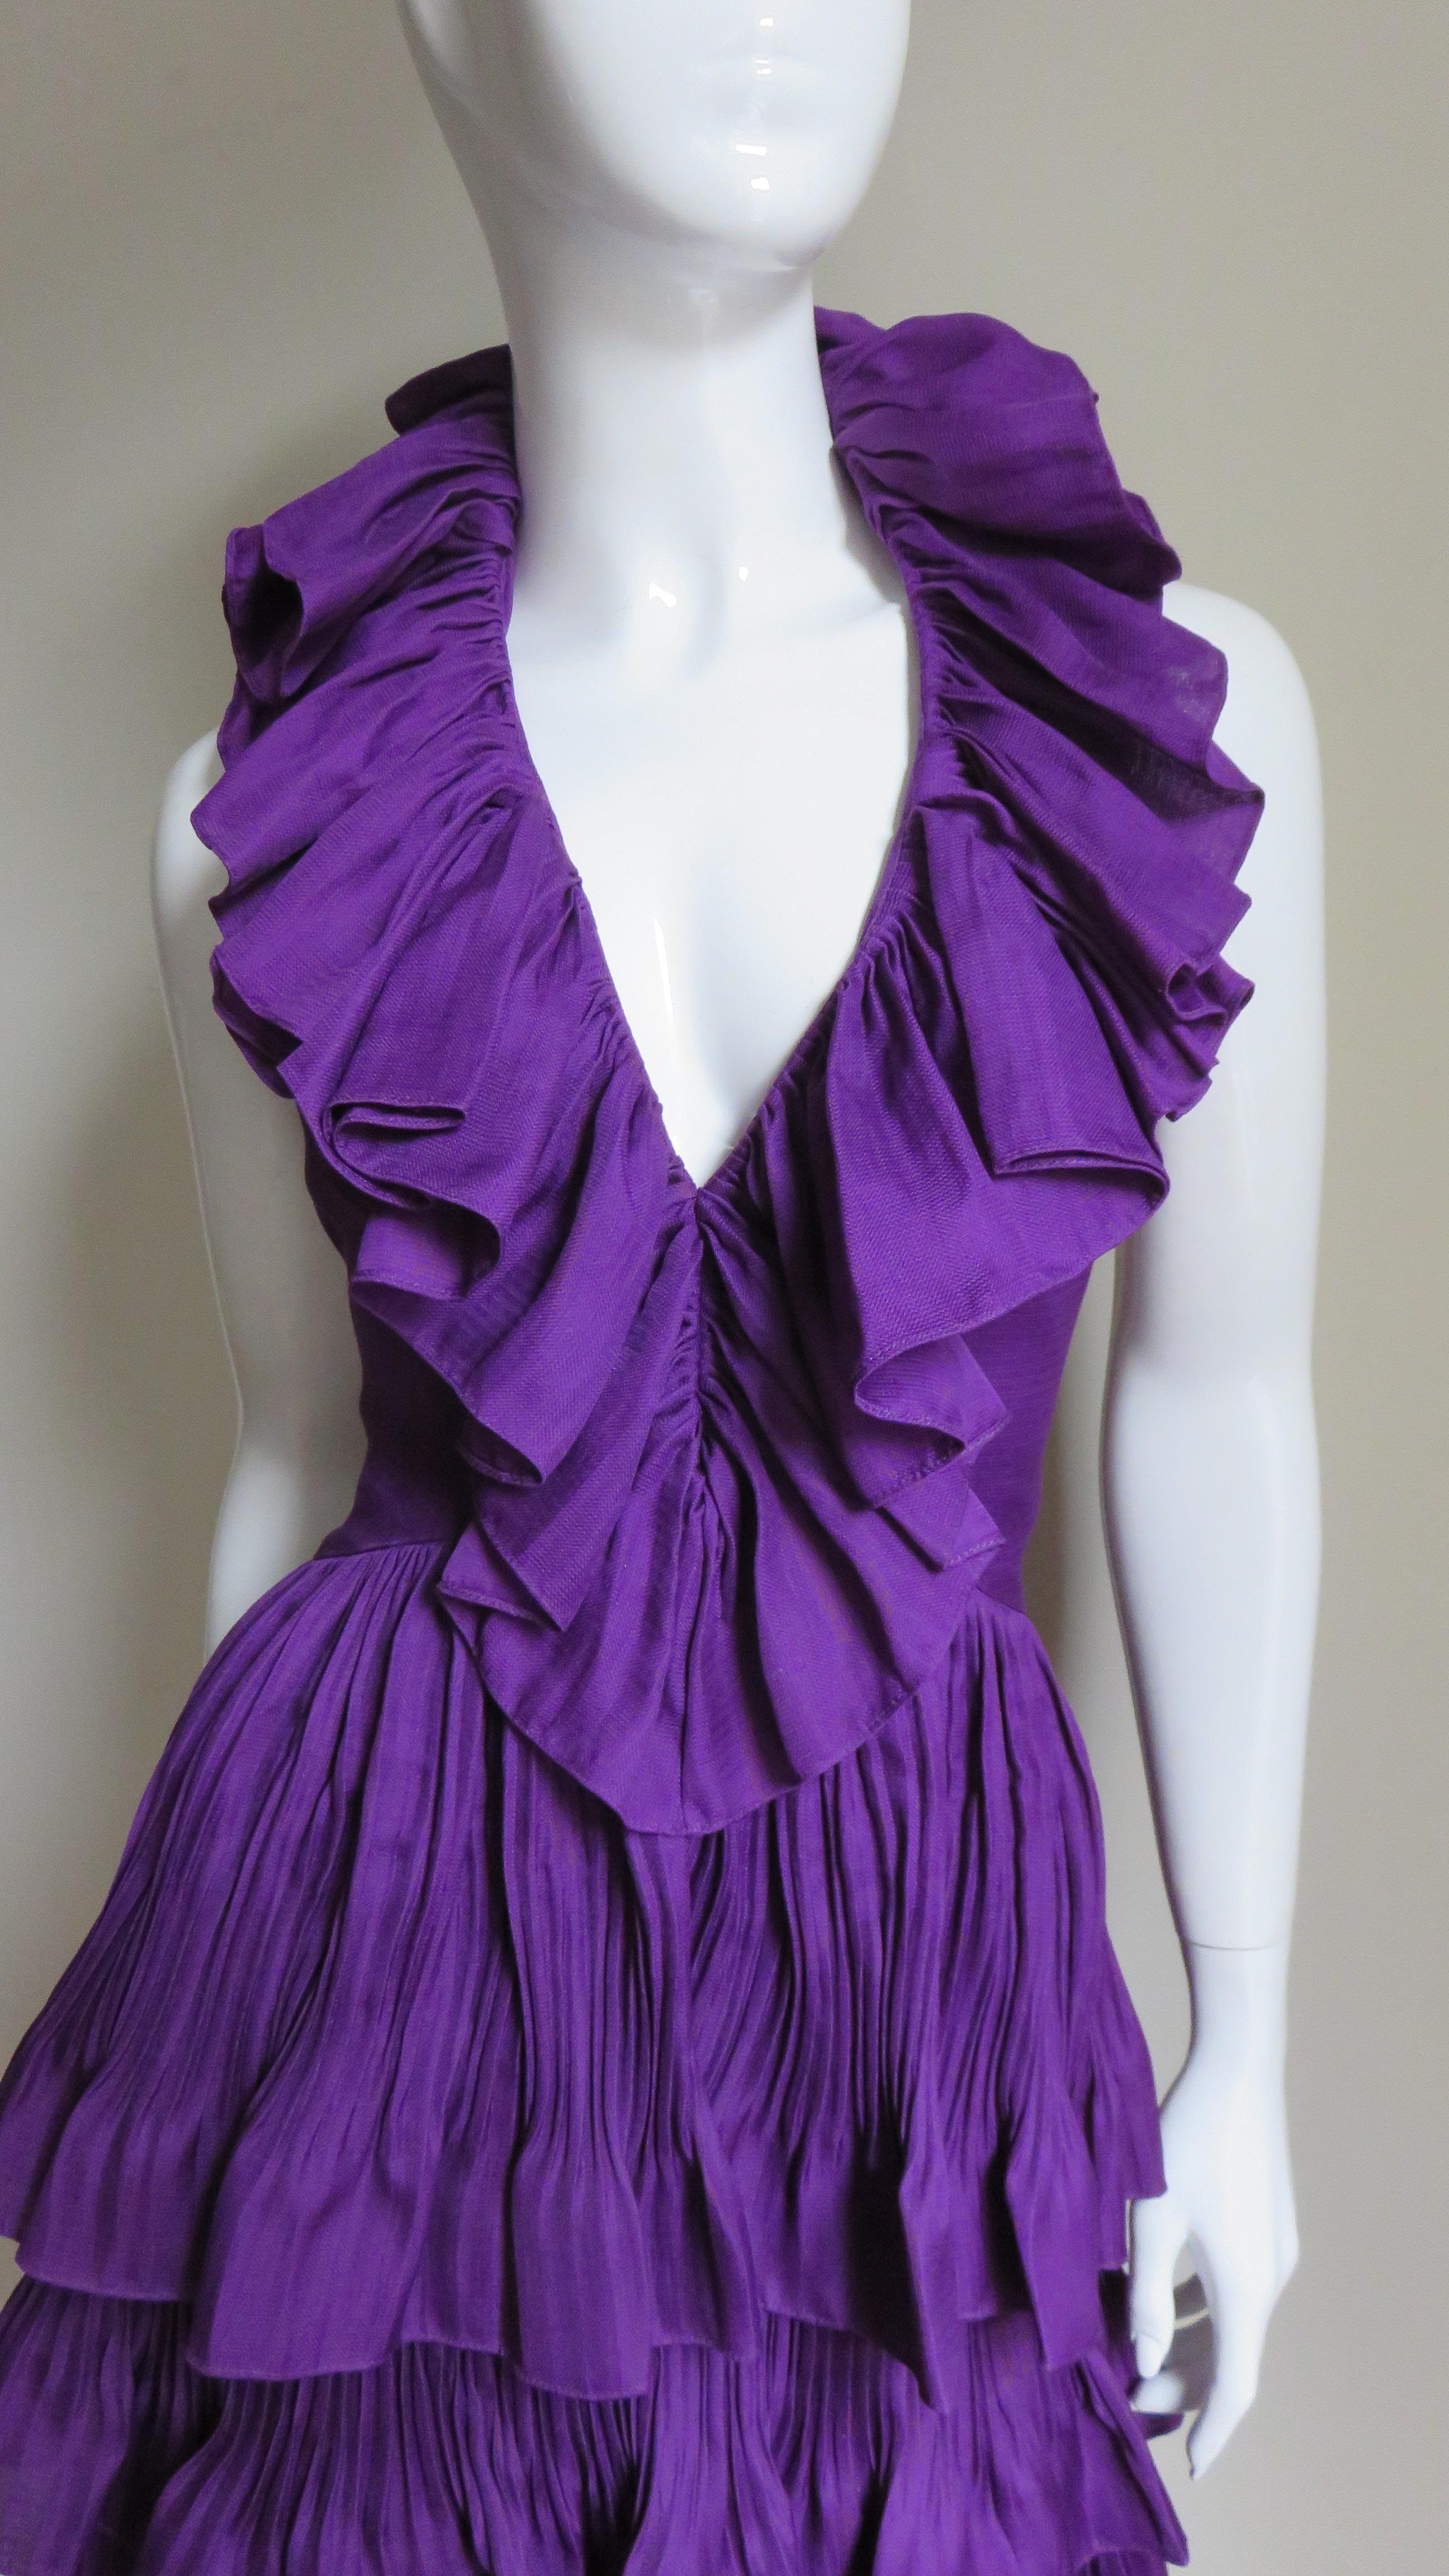 Women's John Galliano for Christian Dior 2009 Plunge Silk Halter Dress